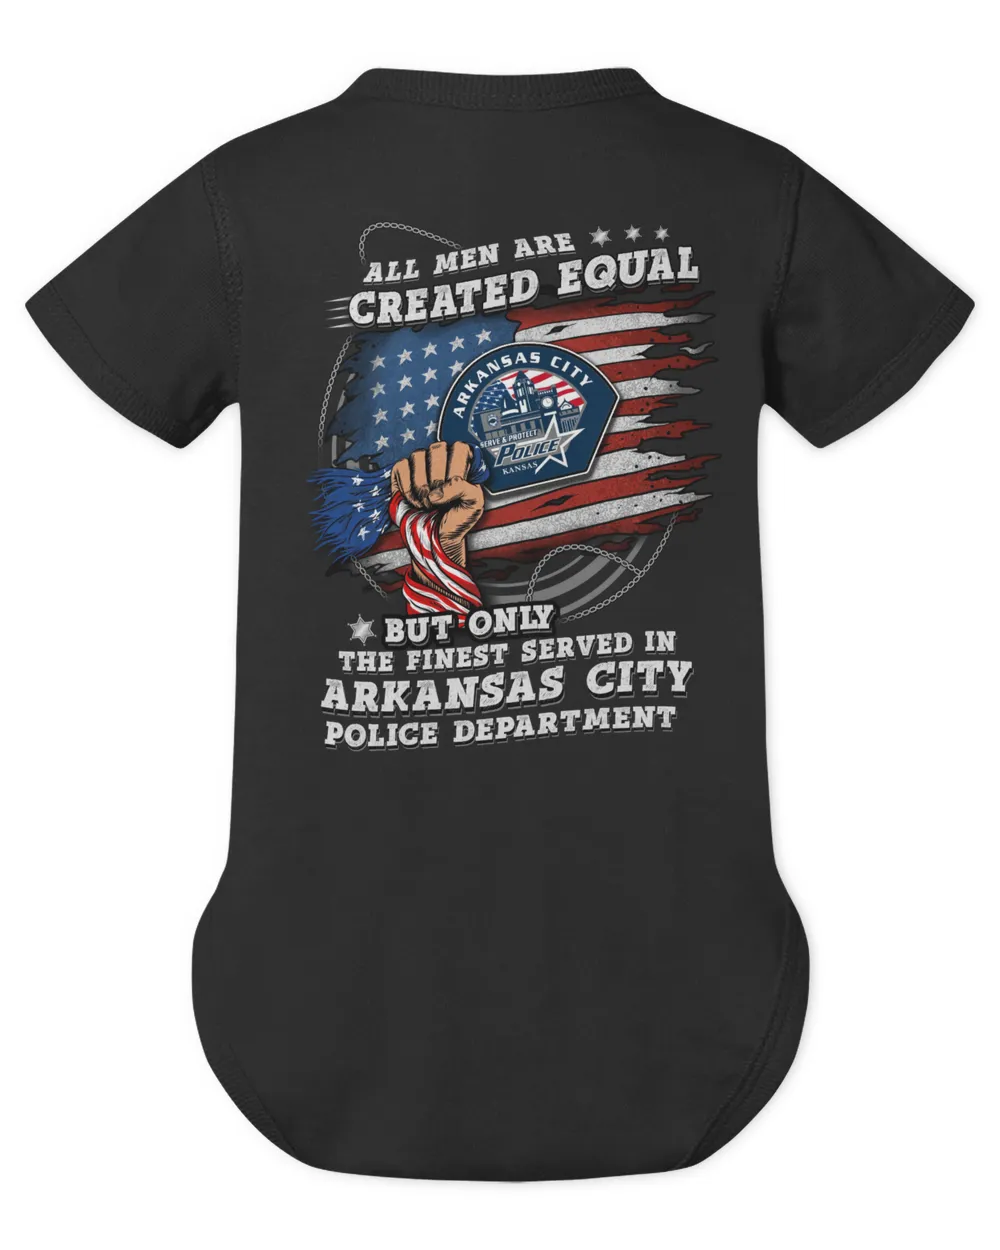 Arkansas City police department m